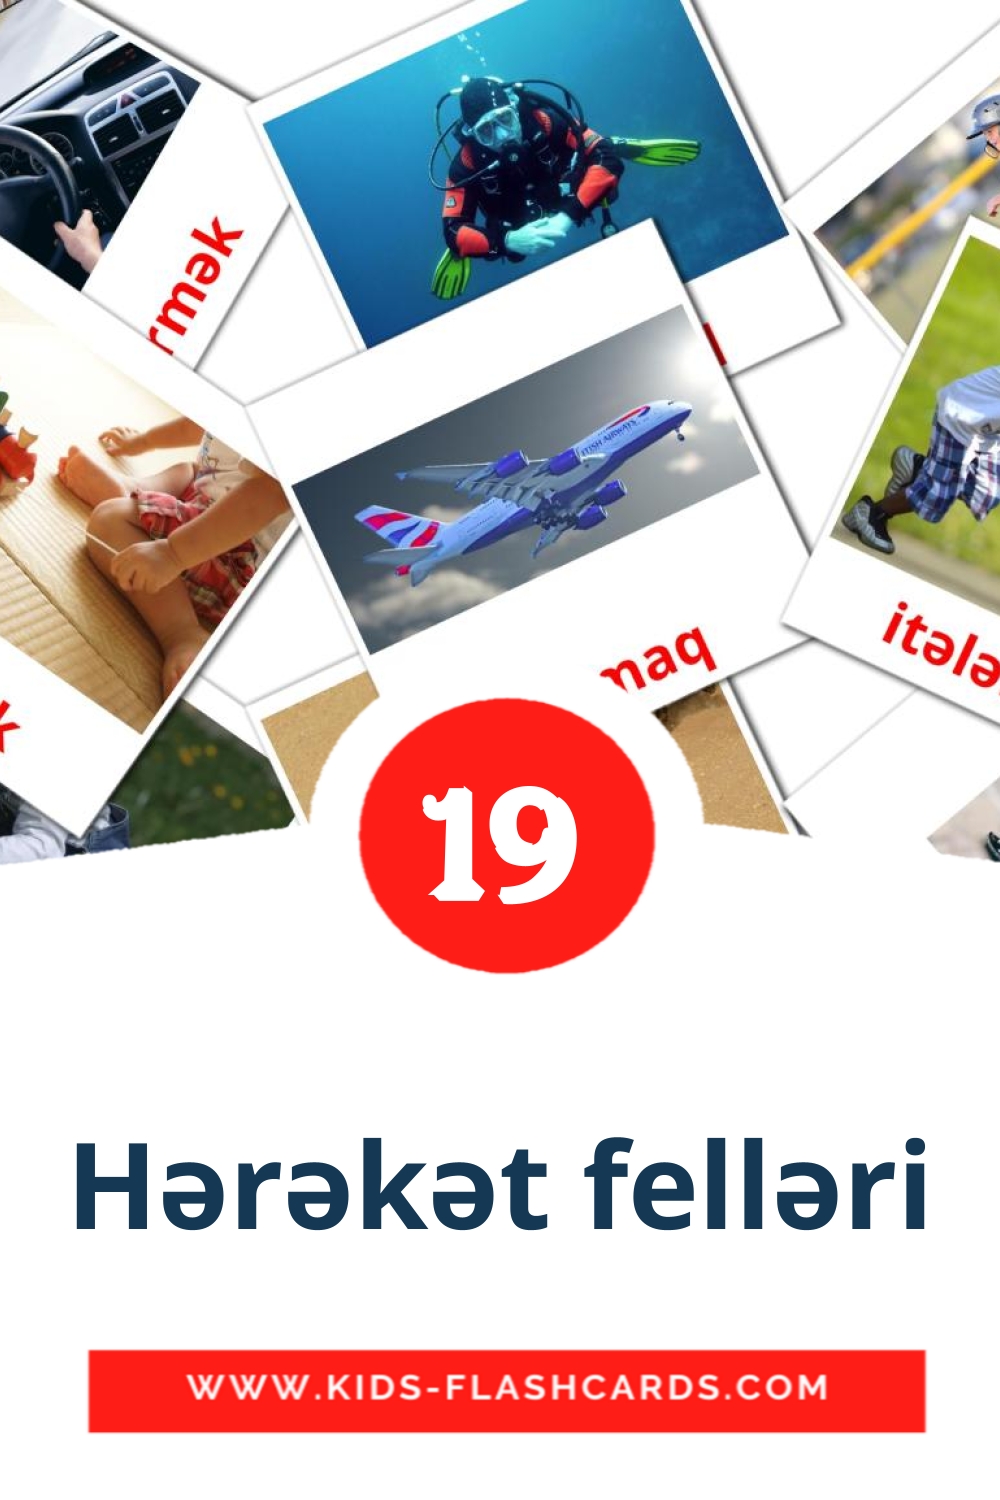 19 carte illustrate di Hərəkət felləri per la scuola materna in azerbaijani